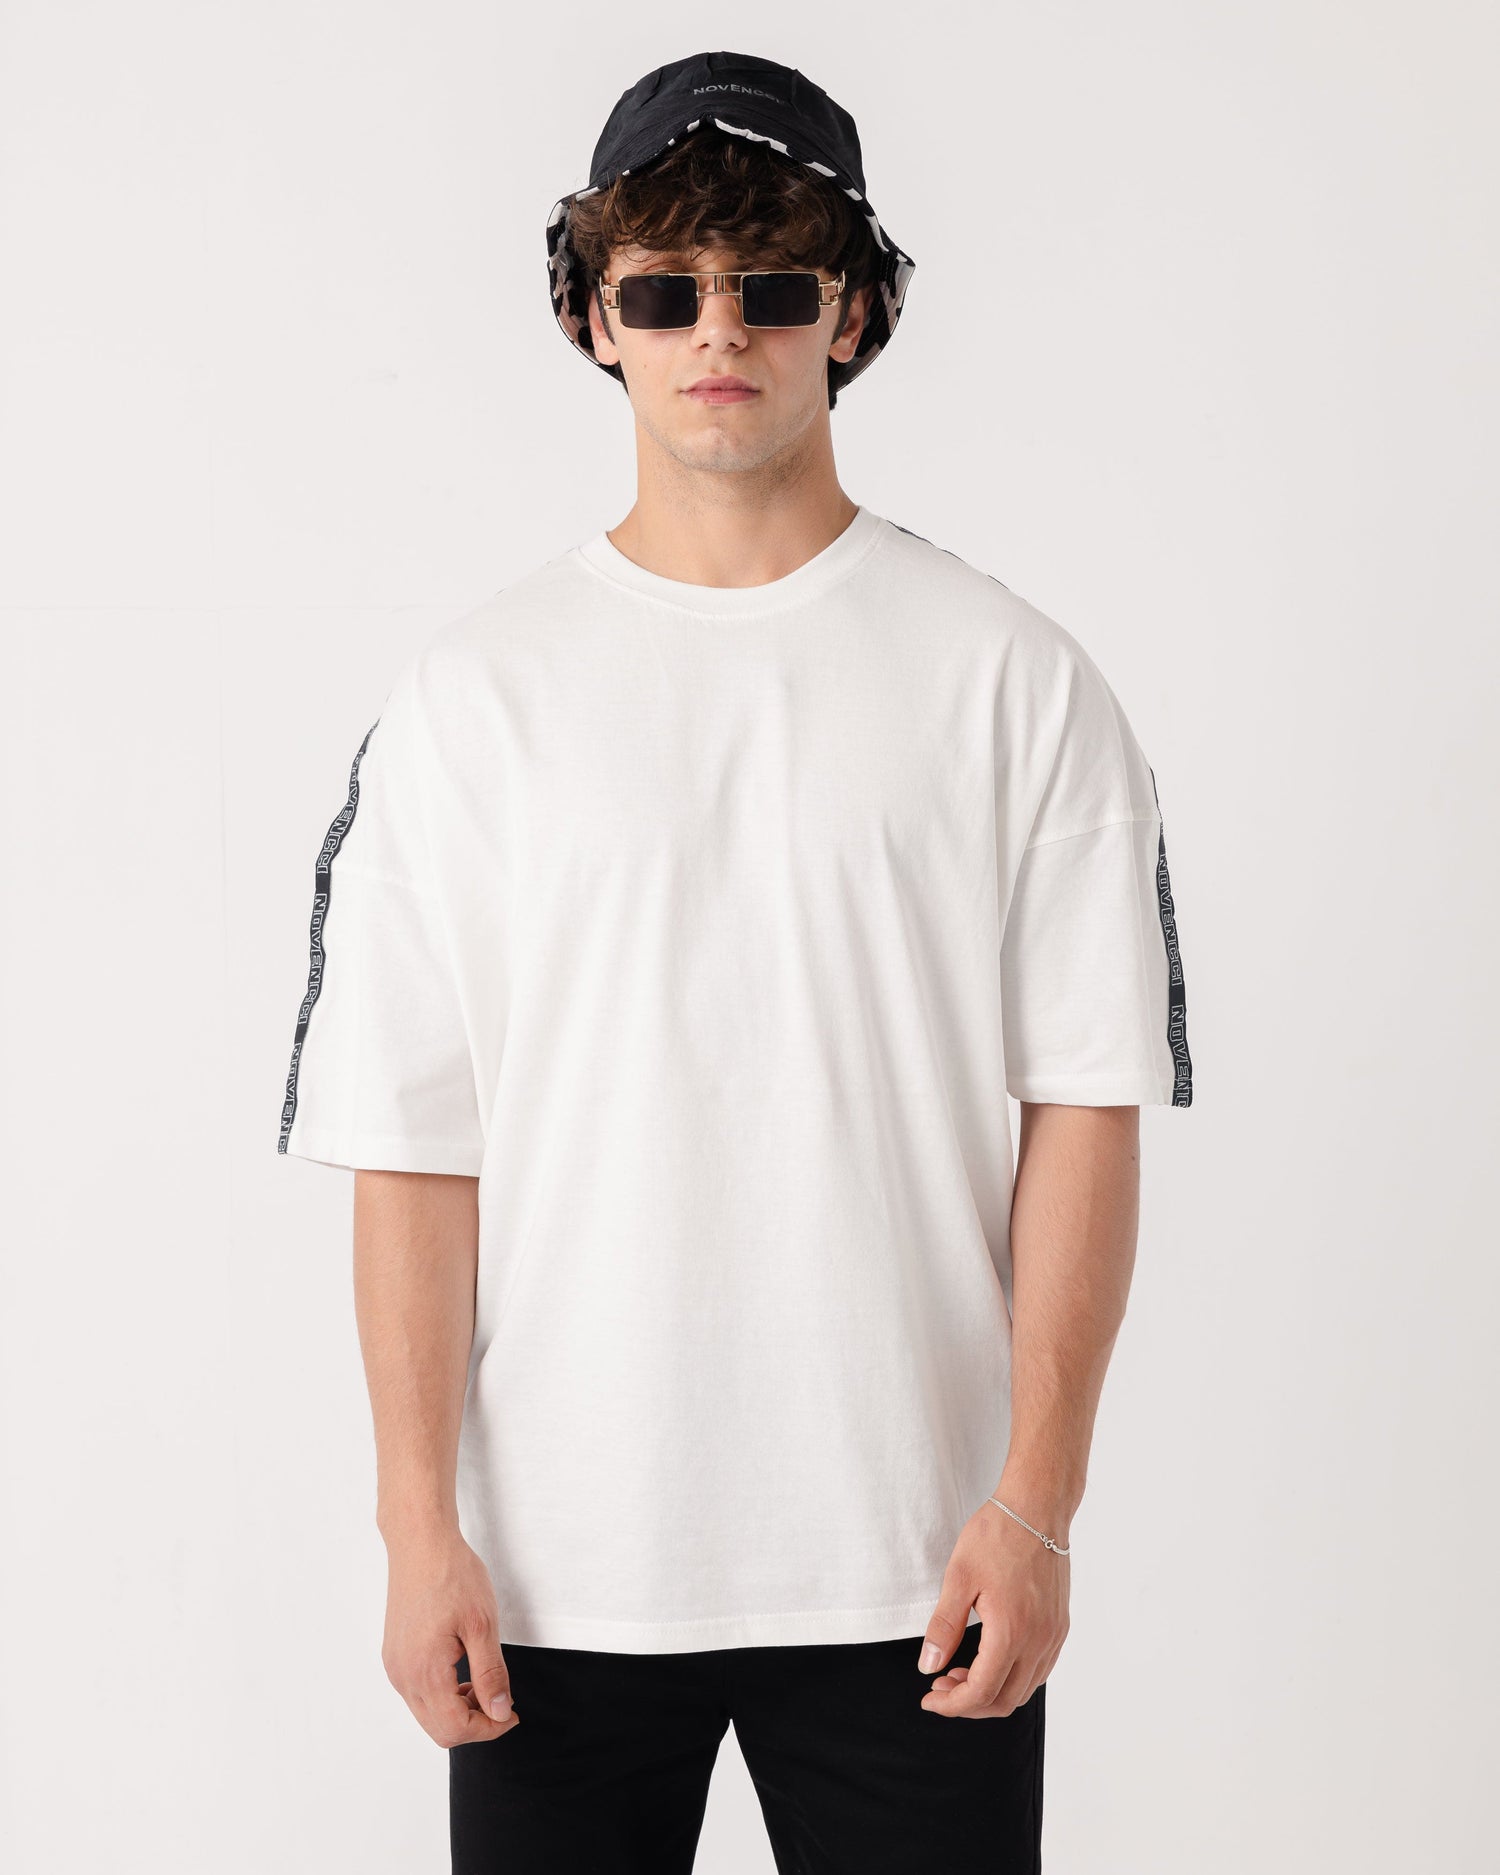 Novencci Oversized White t-shirt